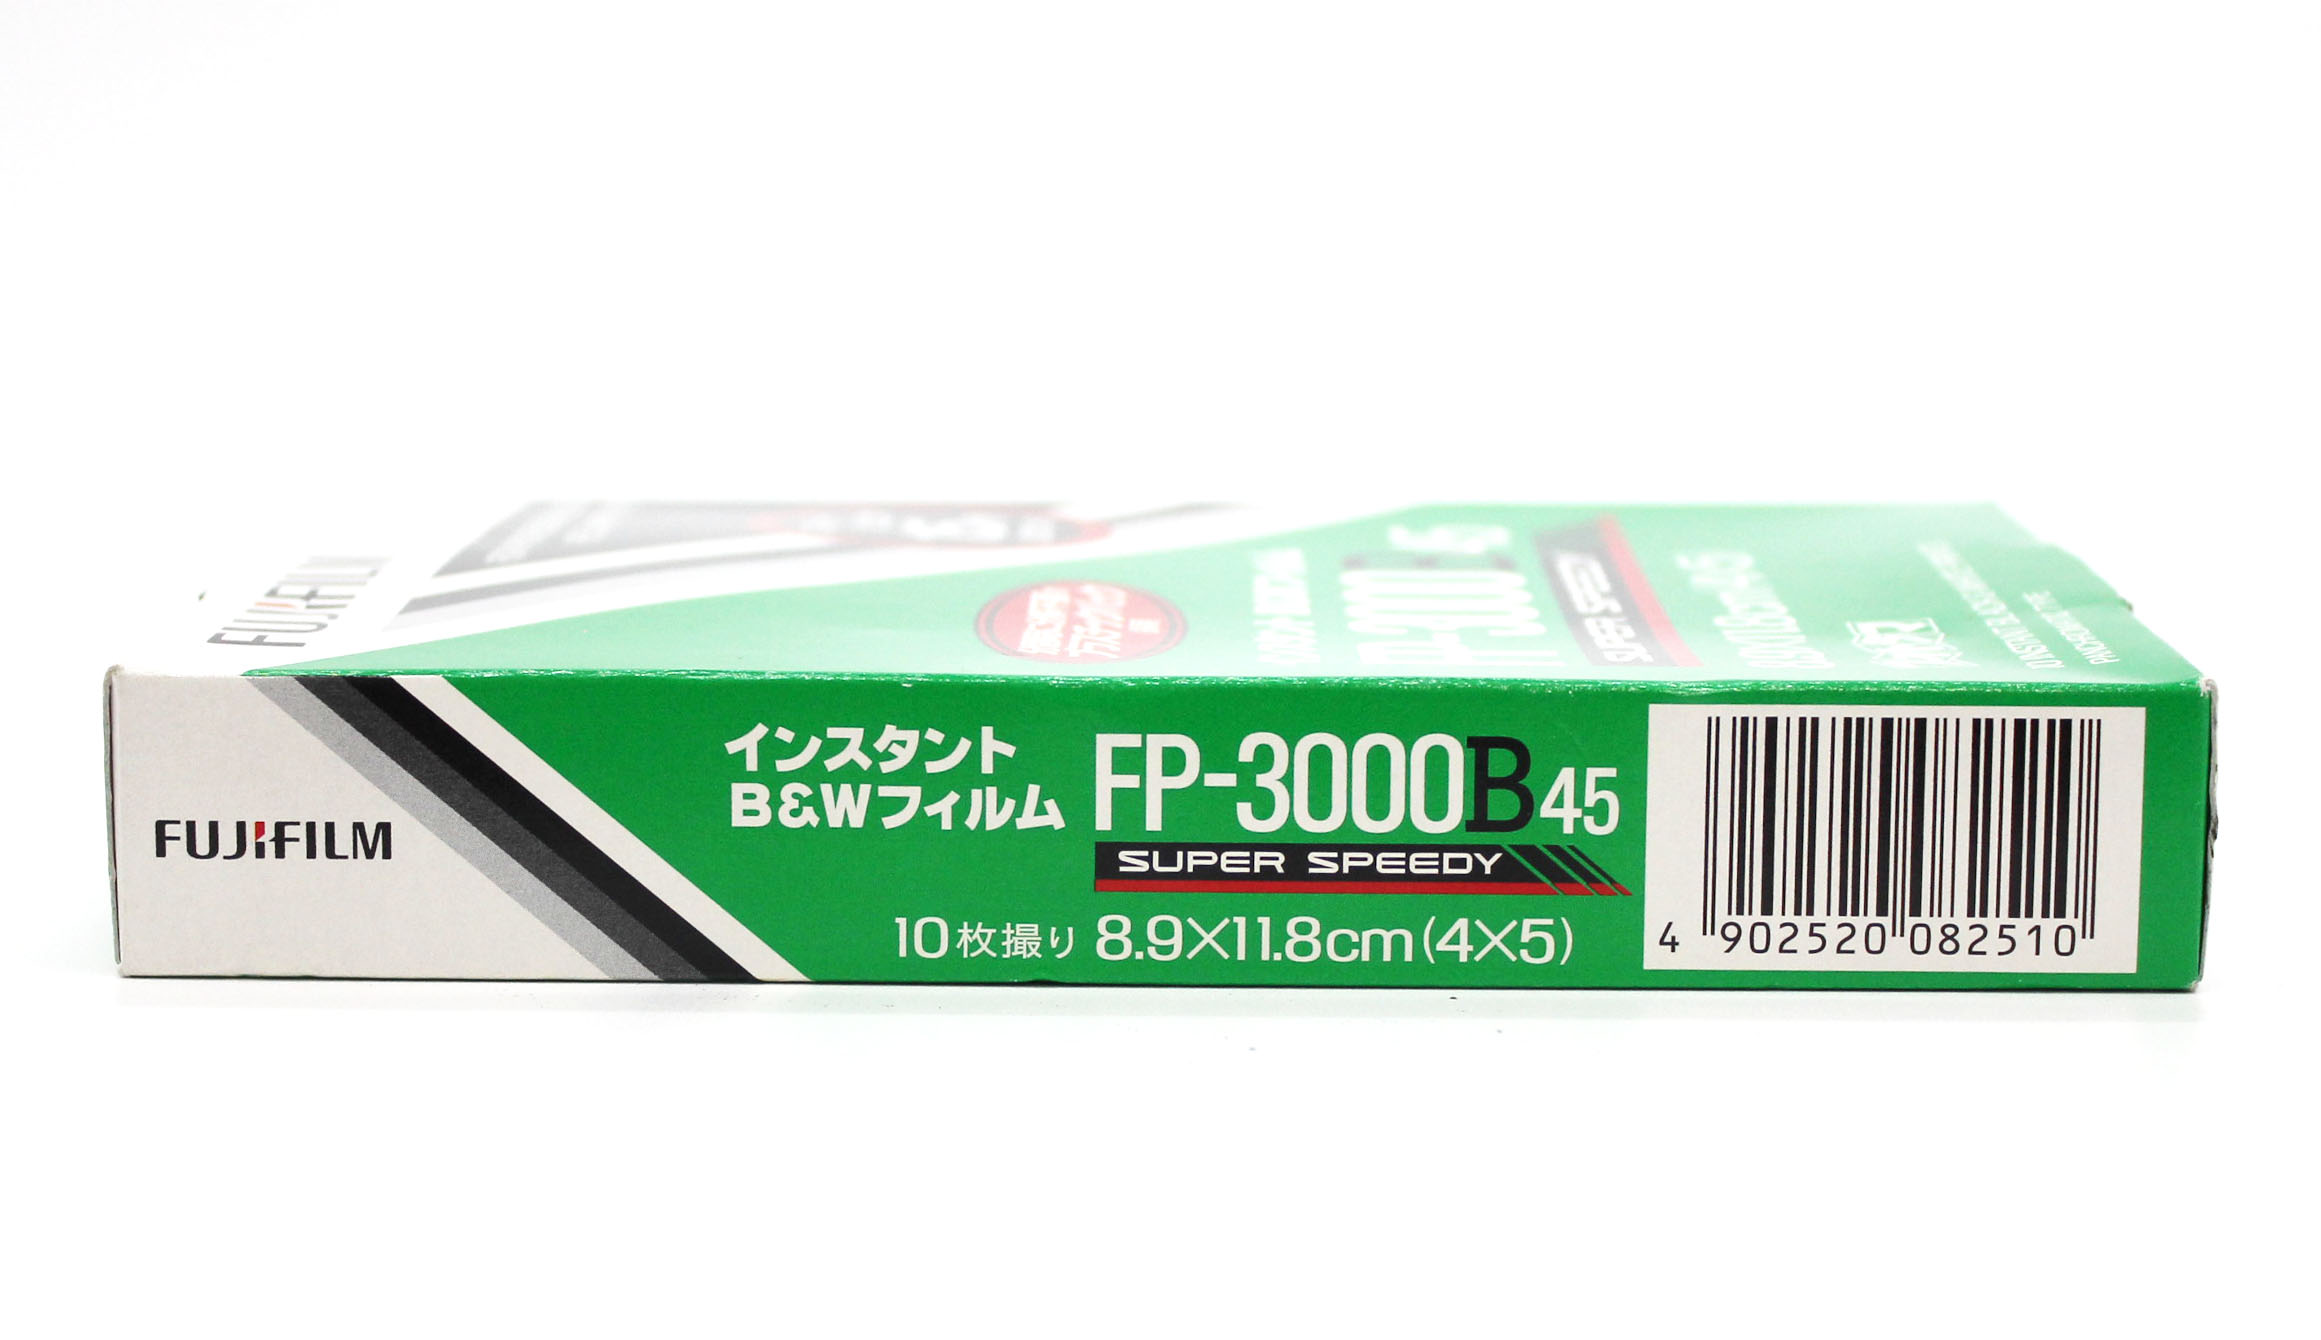  Fuji Fujifilm FP-3000B45 4x5 8.9x11.8cm Instant Black & White Film (EXP 10/2010) from Japan Photo 4